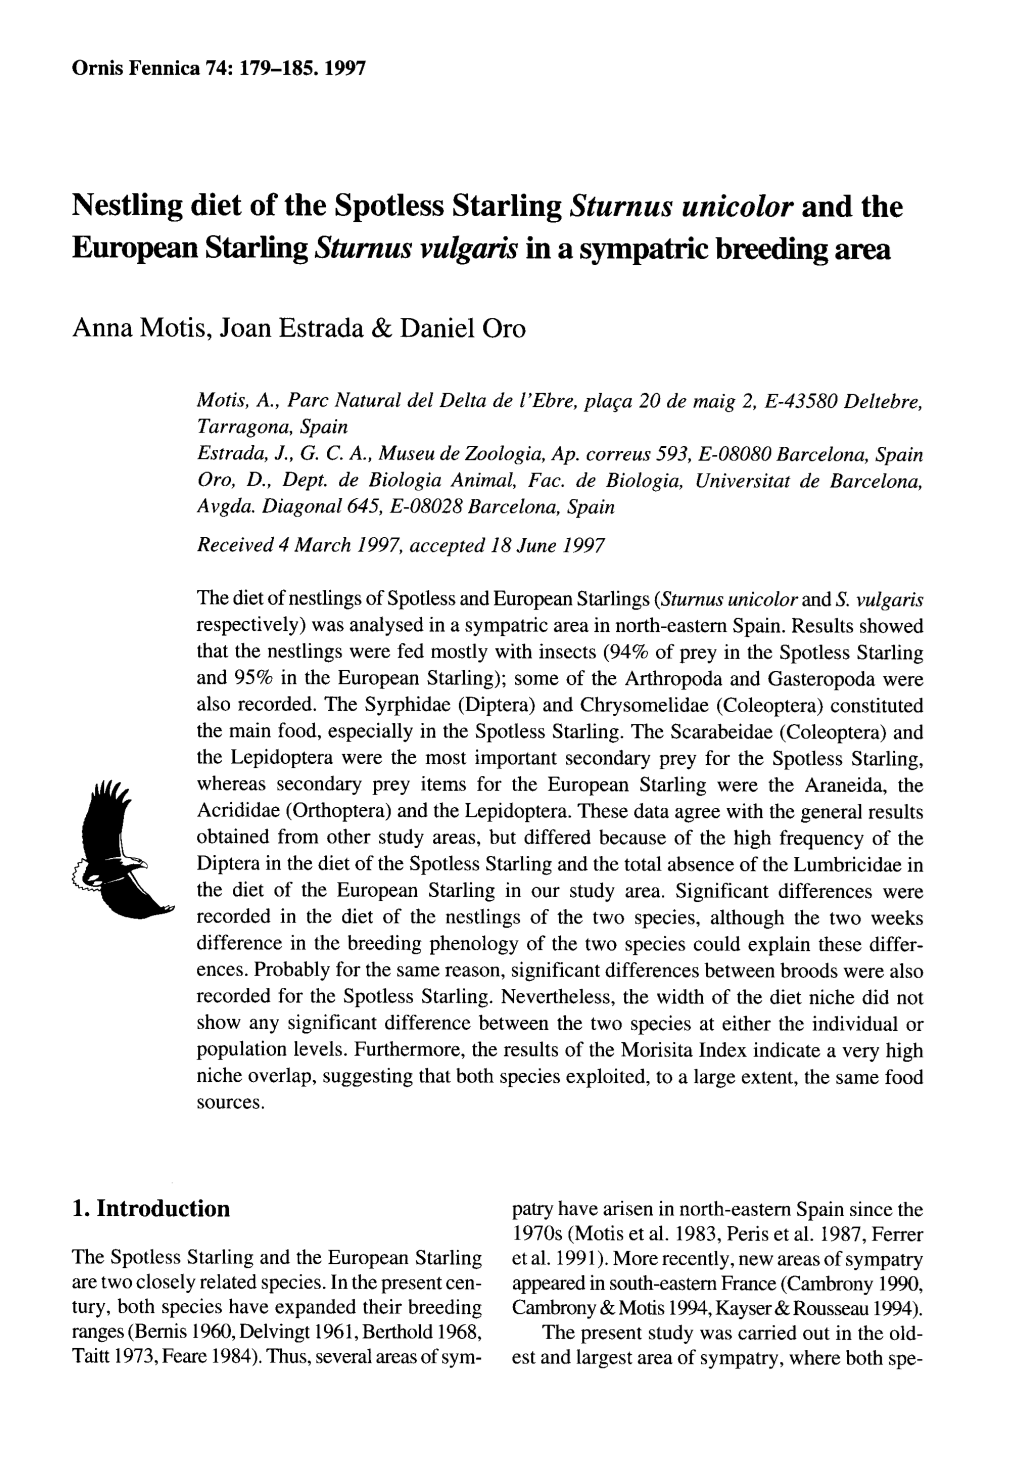 Nestling Diet of the Spotless Starling Sturnus Unicolor and the European Starling Sturnus Vulgaris in a Sympatric Breeding Area